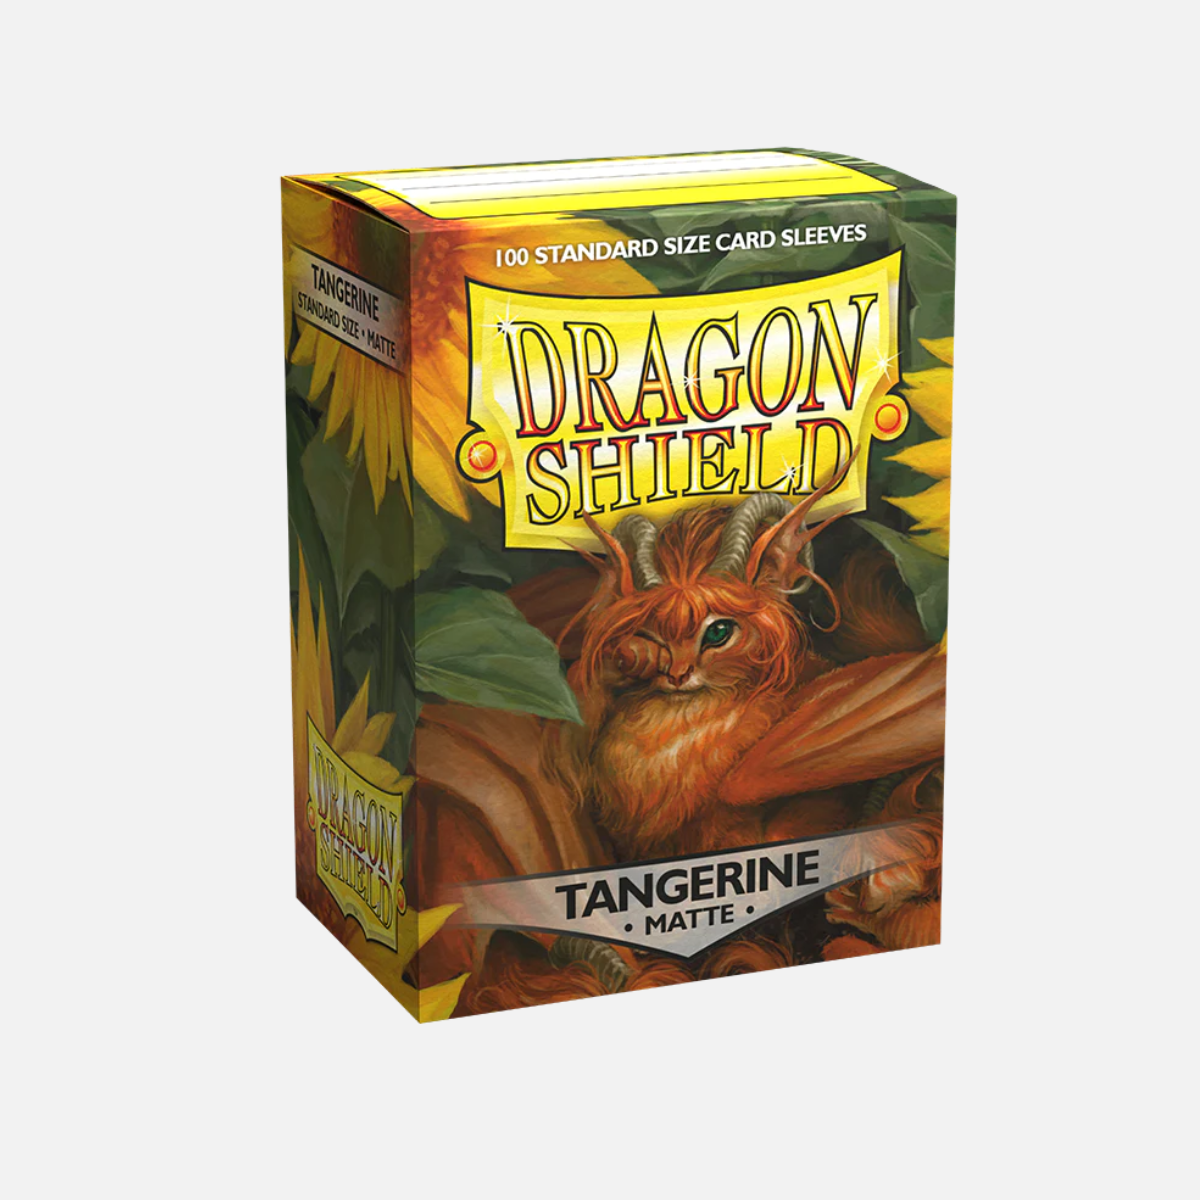 Dragon Shield card sleeves box of 100 tangerine matte